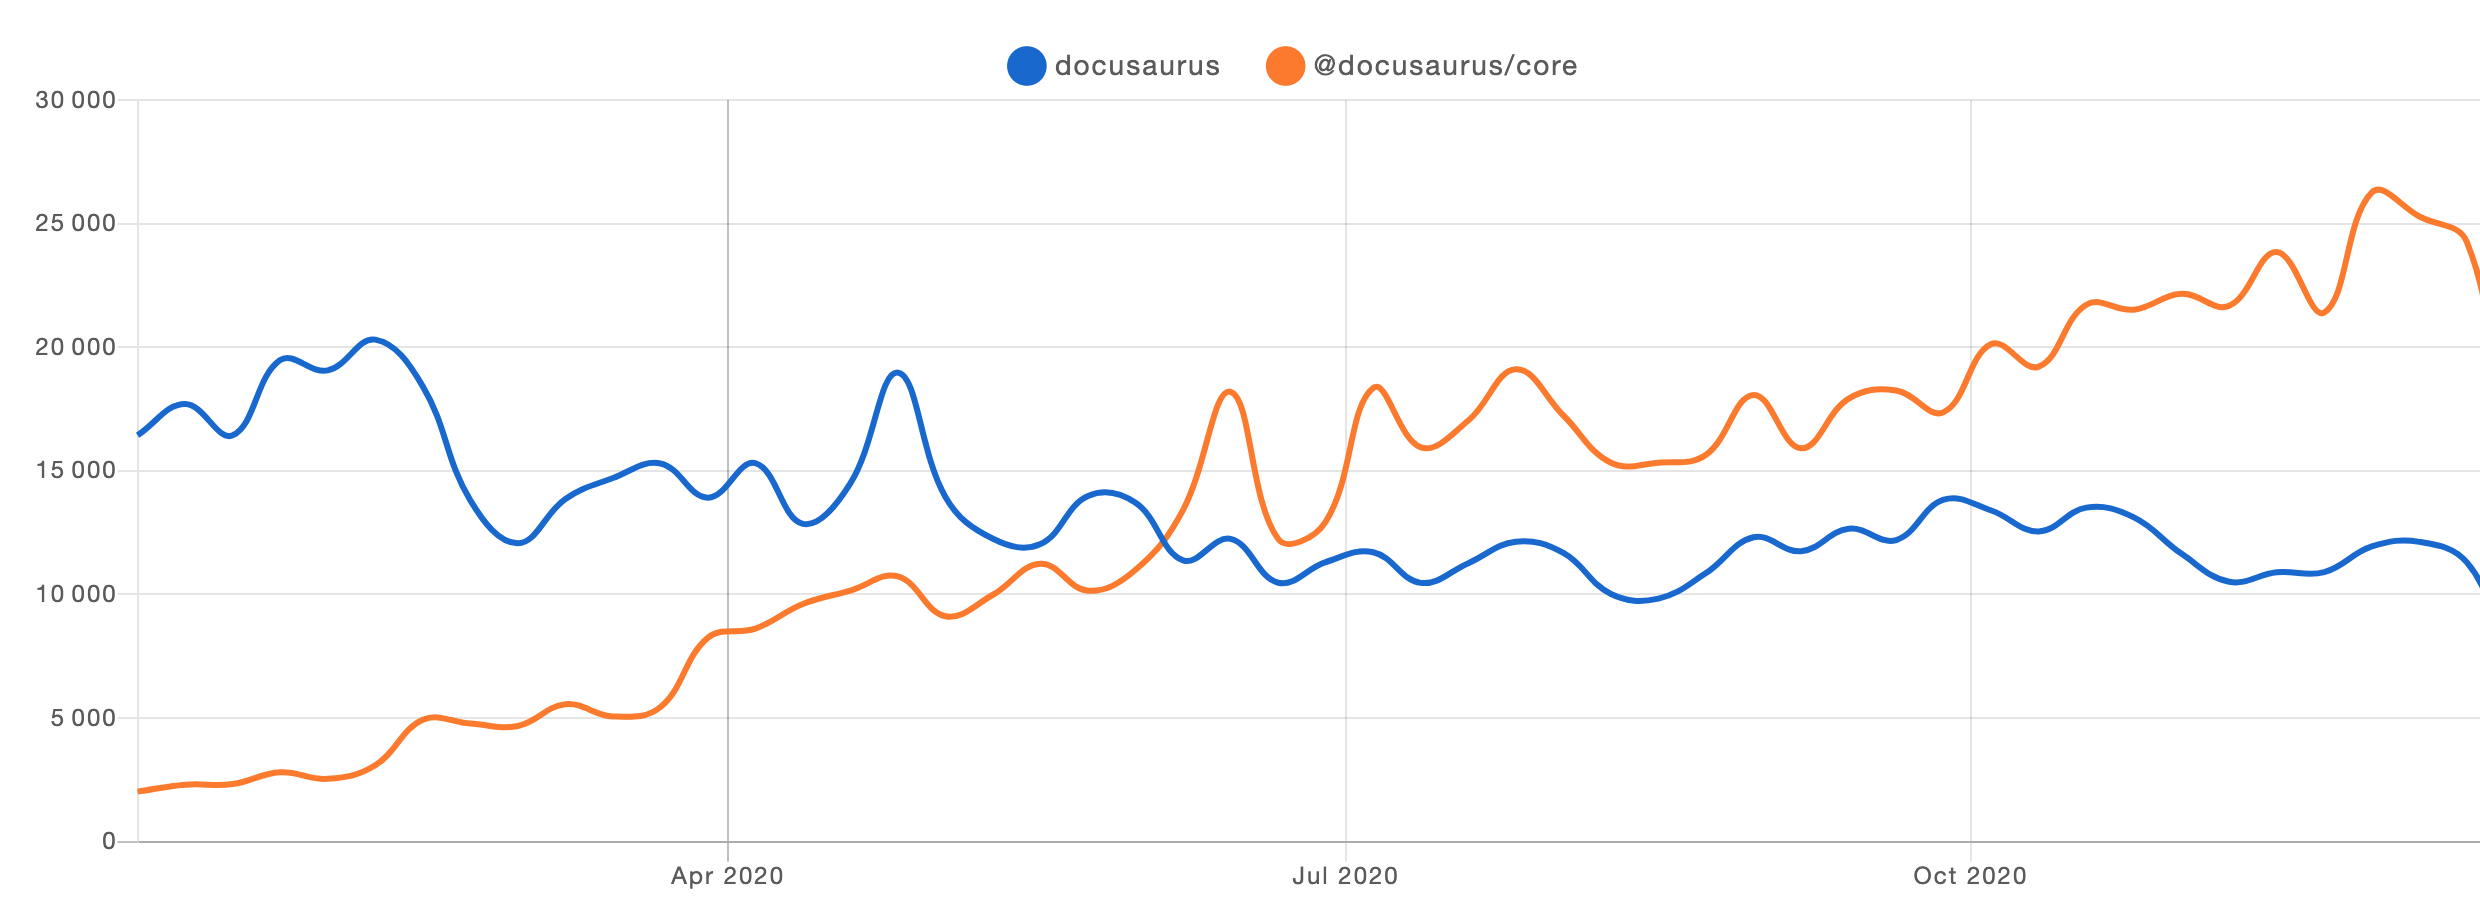 Docusaurus v1 vs. v2 npm trends of the year 2020. 도큐사우루스 v2의 설치는 눈에 띄게 증가하고 있는 반면 v1은 약간 하향세입니다. v1 설치는 15000에서 시작해서 10000으로 줄어들었지만 v2는 2000에서 시작�해서 25000까지 늘어났습니다. The intersection happens around June 2020.